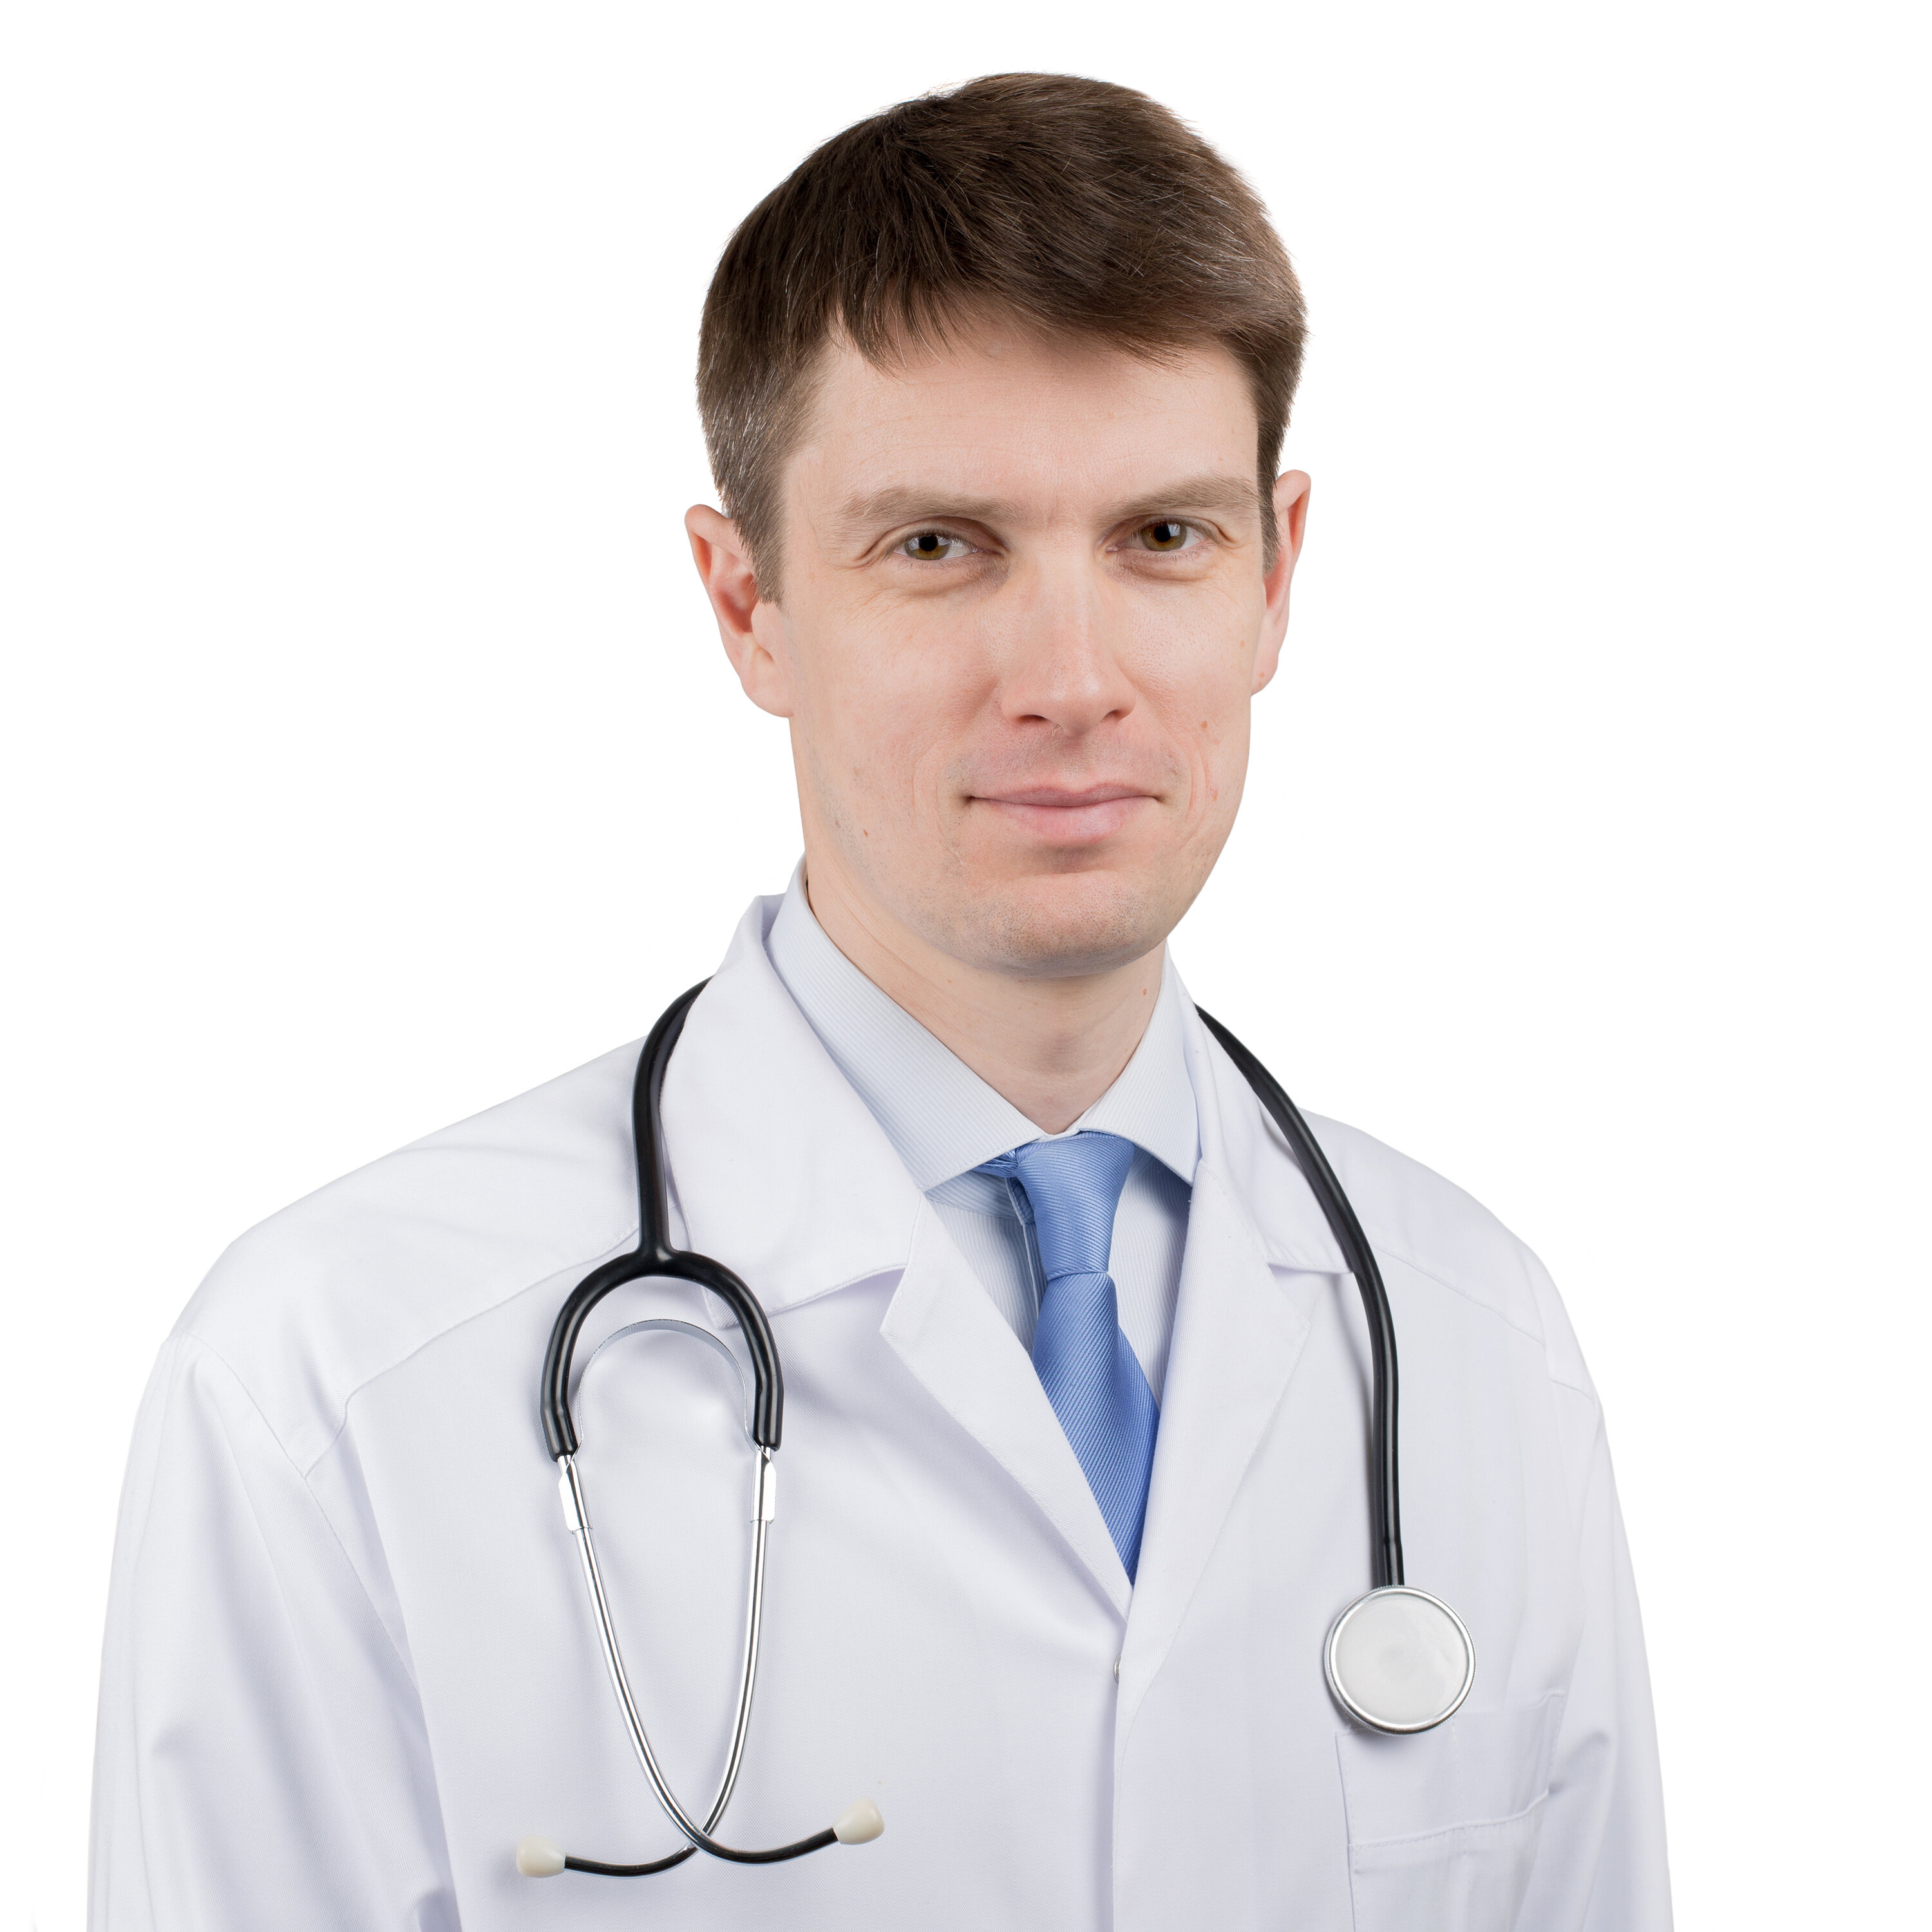 Вакансия врач владивосток